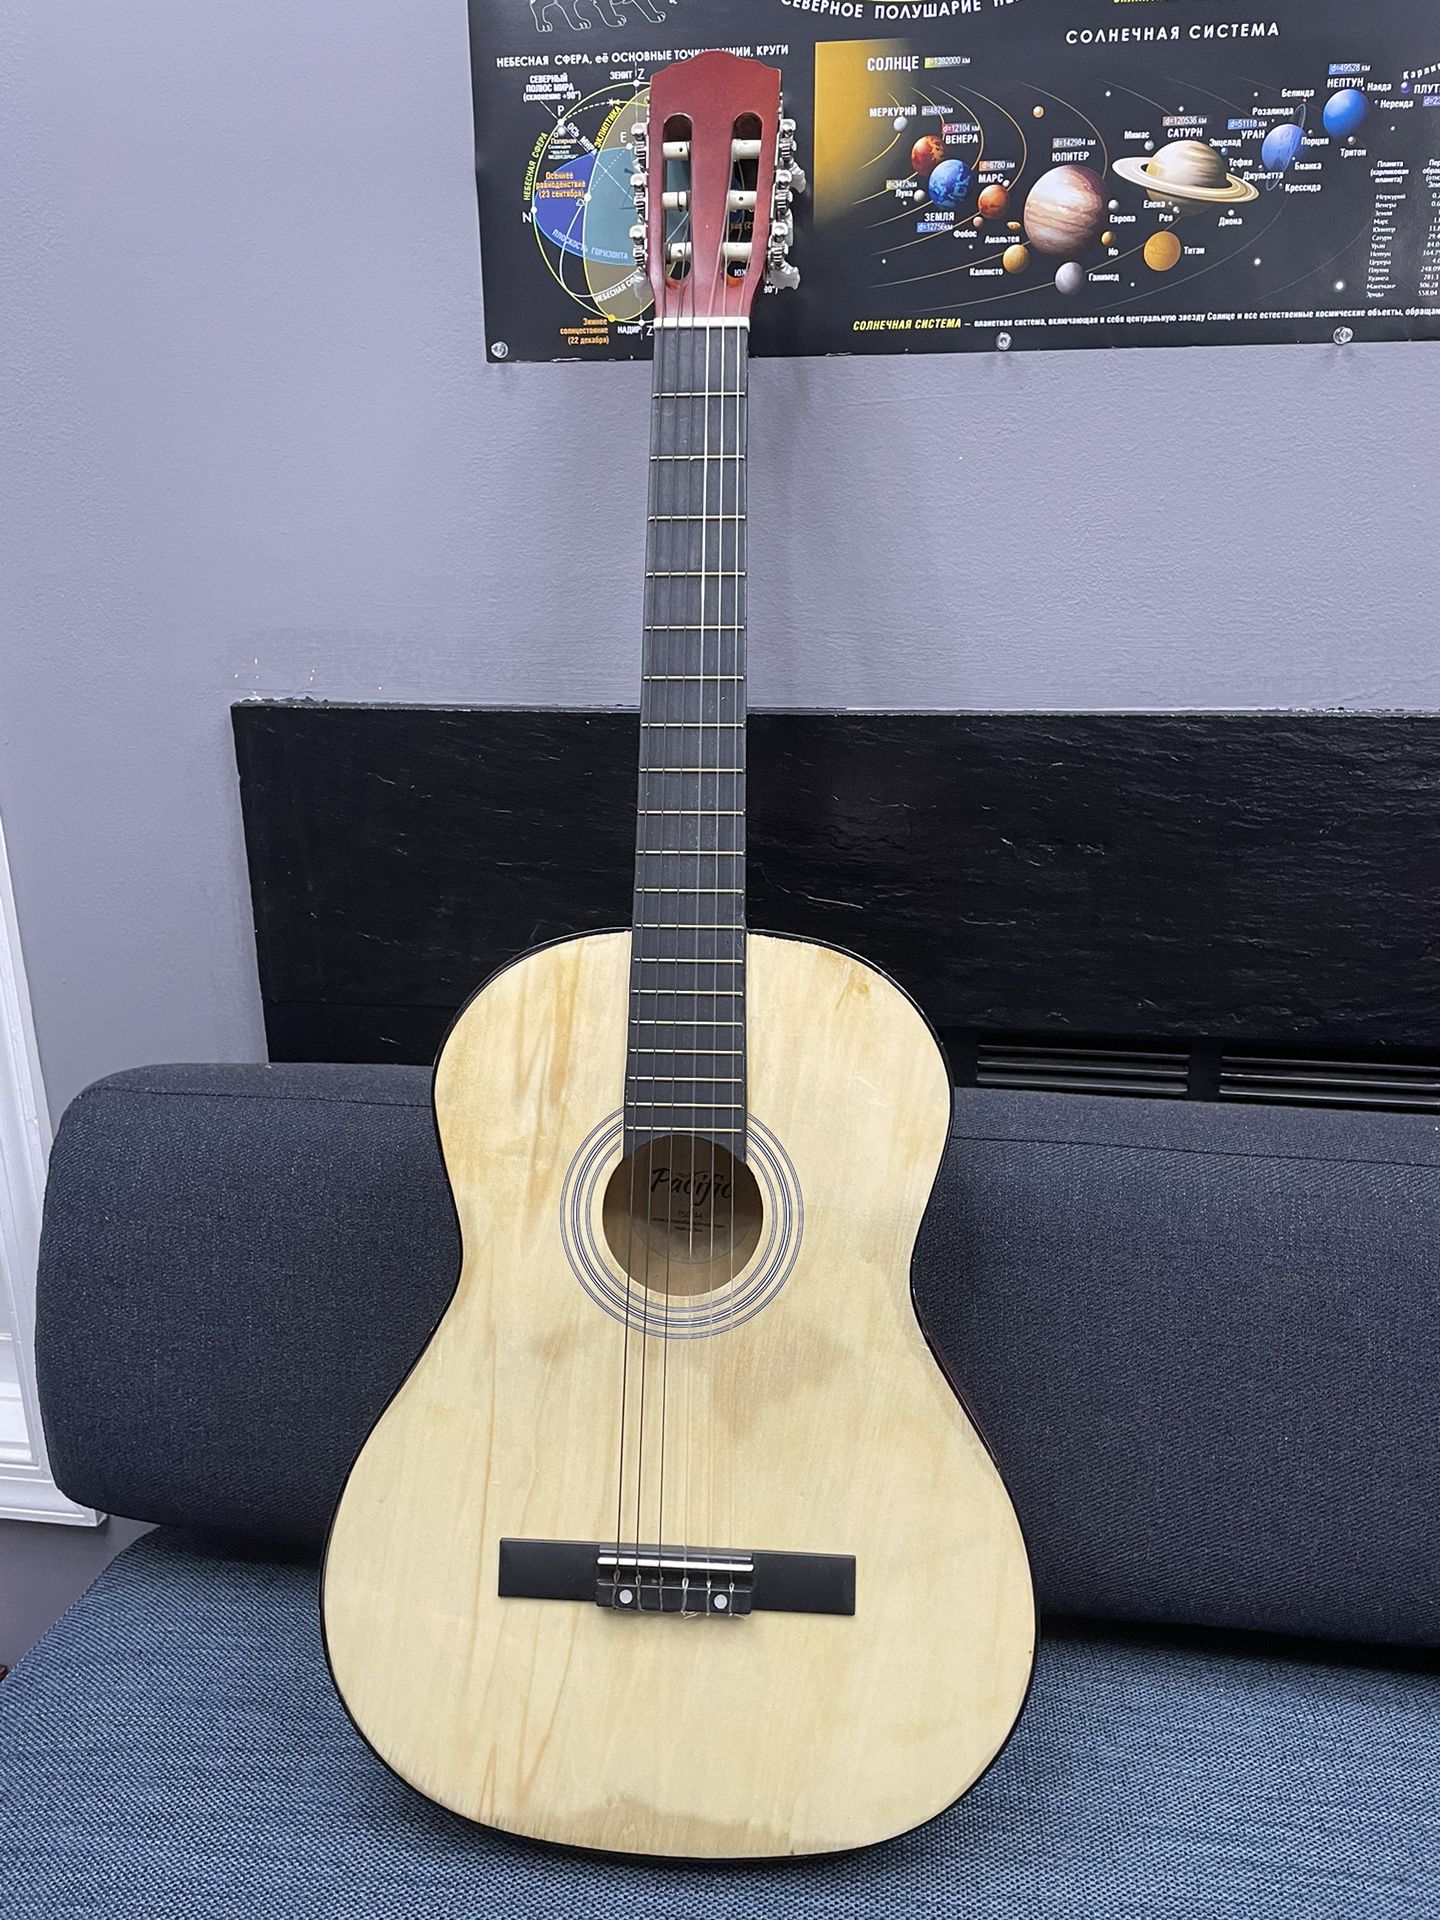 Pacific Guitar PSG 44